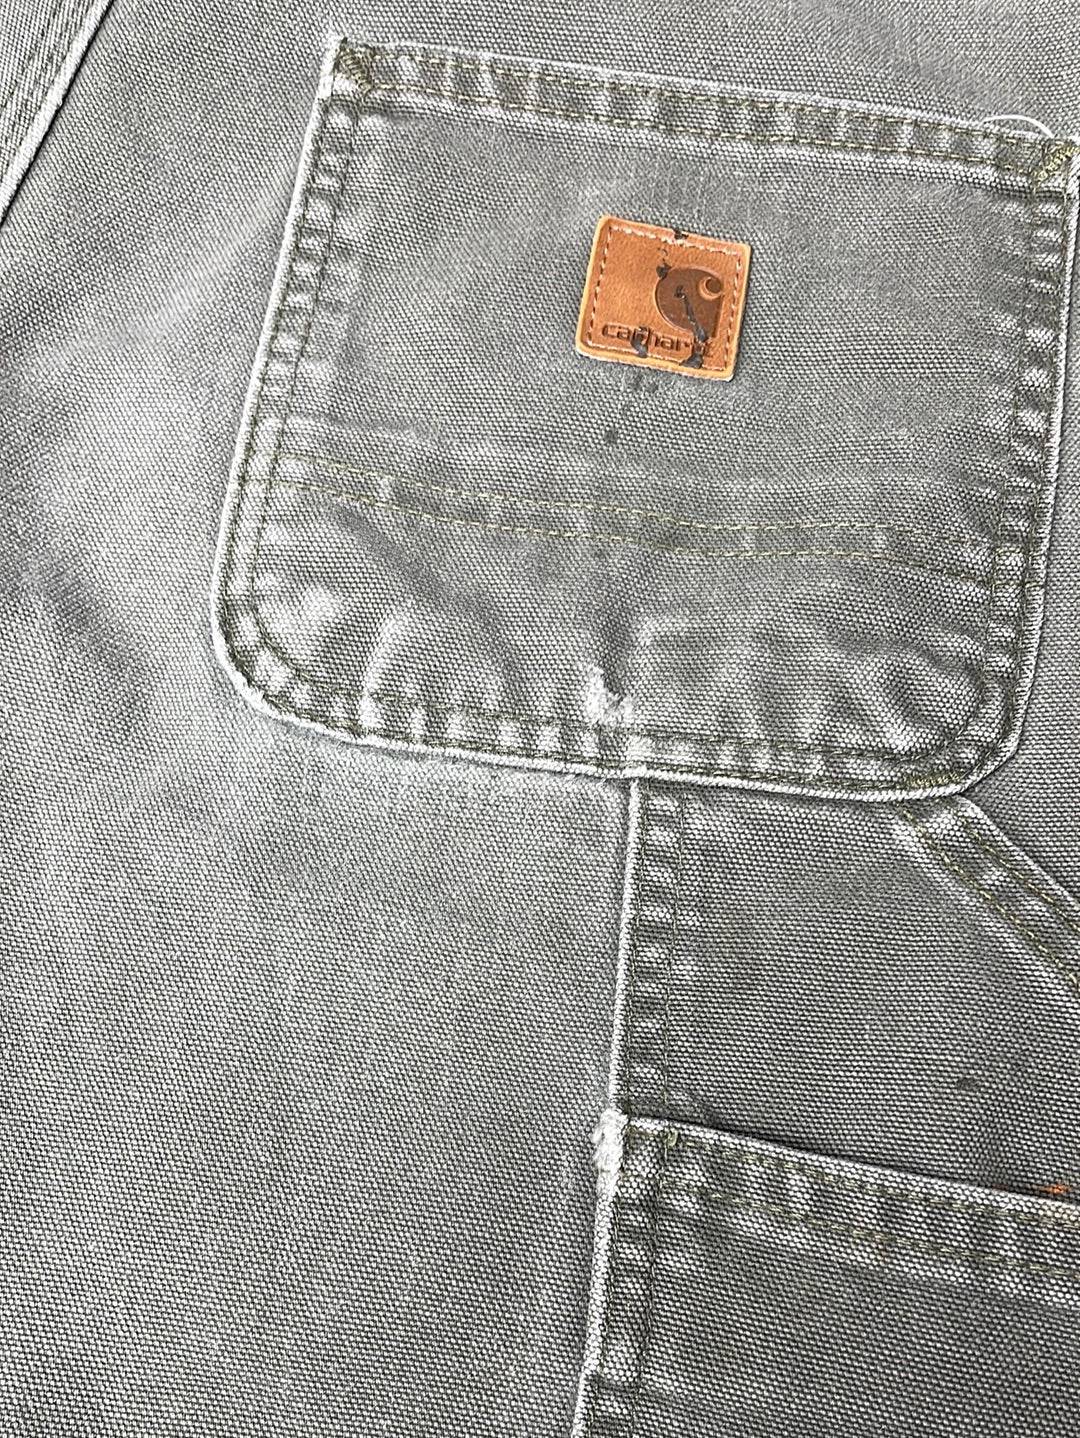 Vintage Carhartt Jeans Green // W31 L30 - RHAGHOUSE VINTAGE